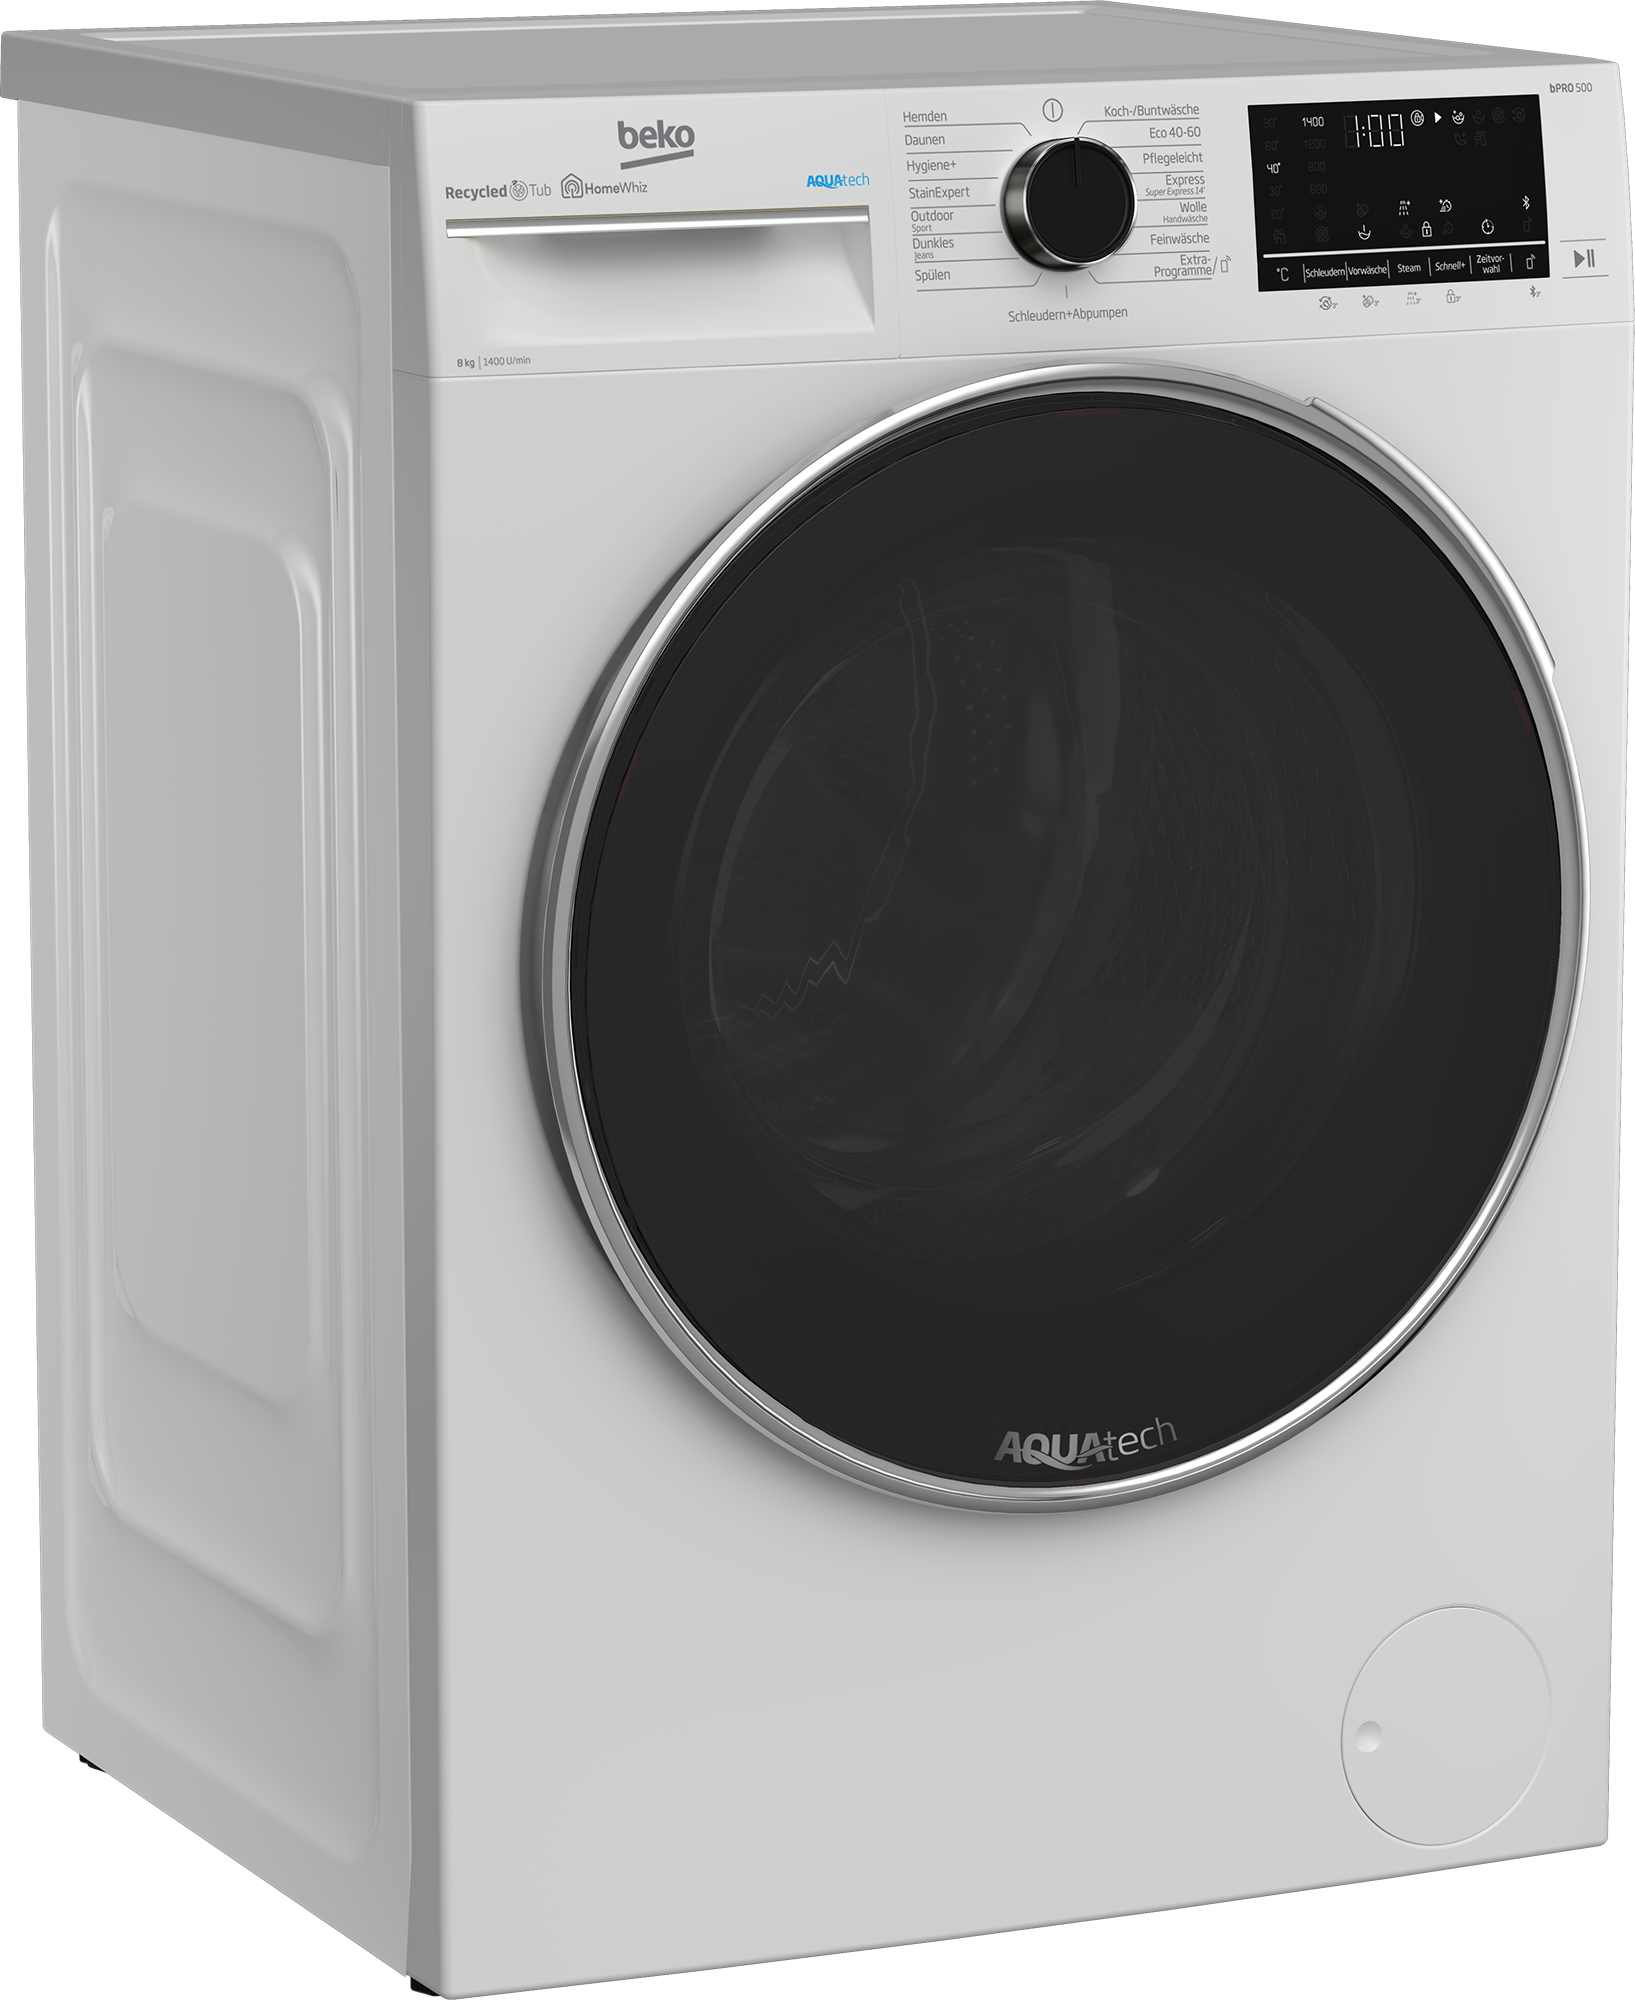 rpm) (8 Washing Machine B5WFU58418W 1400 | BEKO kg, Freestanding |